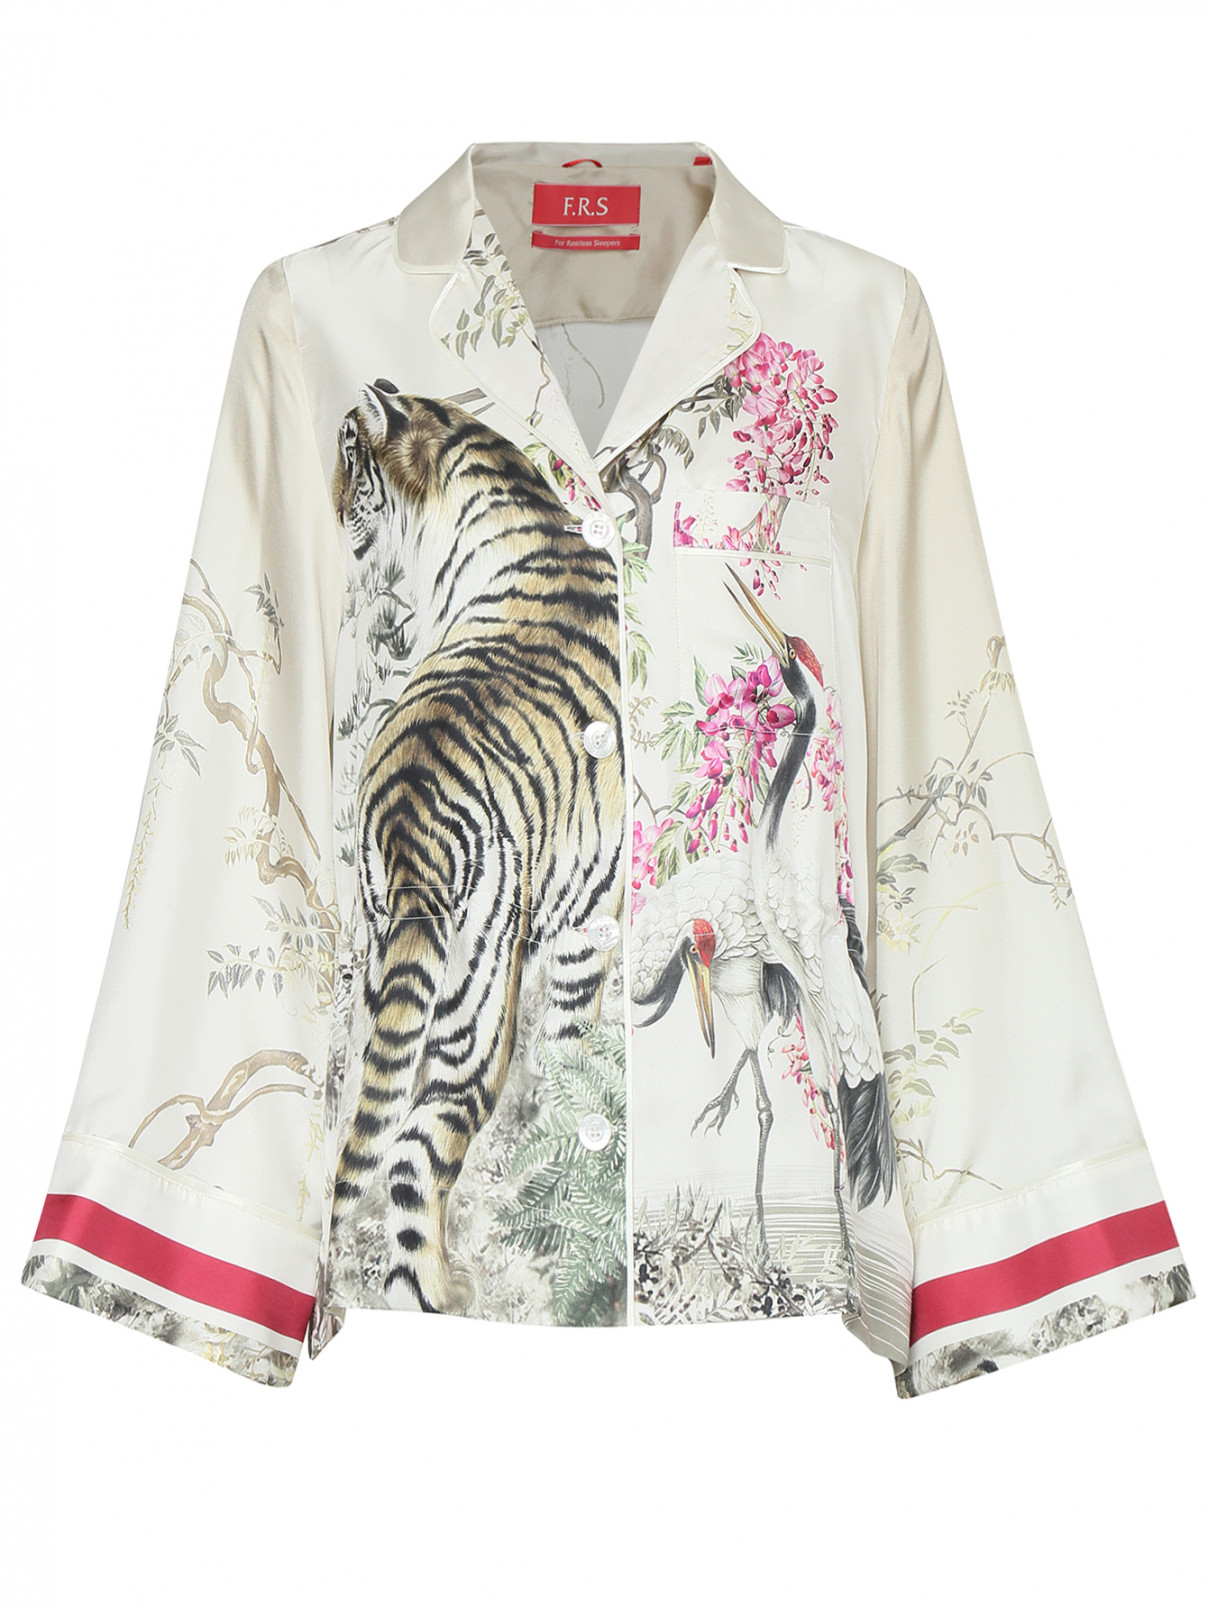 Блуза из шелка с узором Forte Dei Marmi Couture  –  Общий вид  – Цвет:  Узор